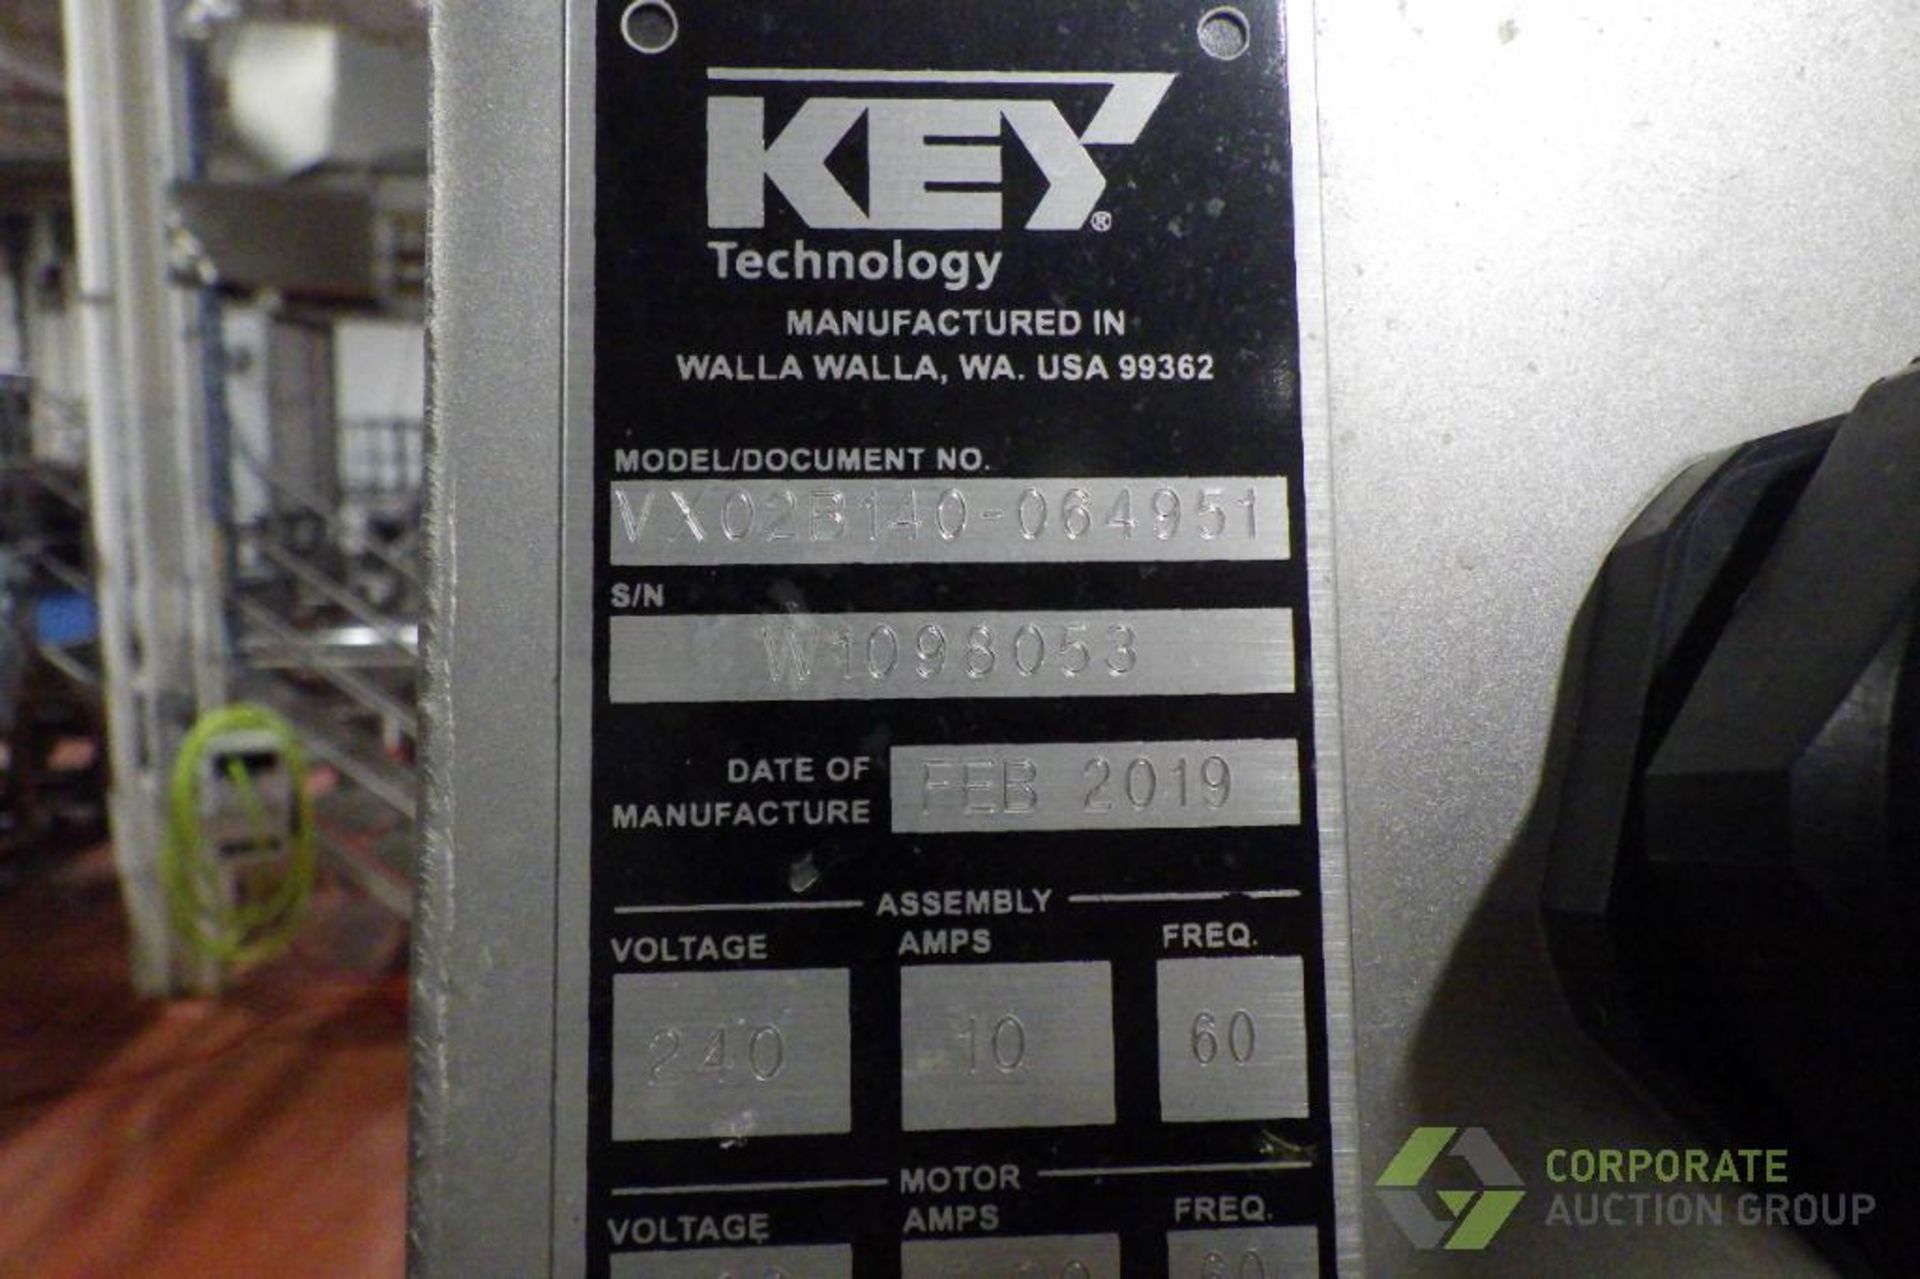 2019 Key Veryx digital vision system with belt feed - Image 9 of 39